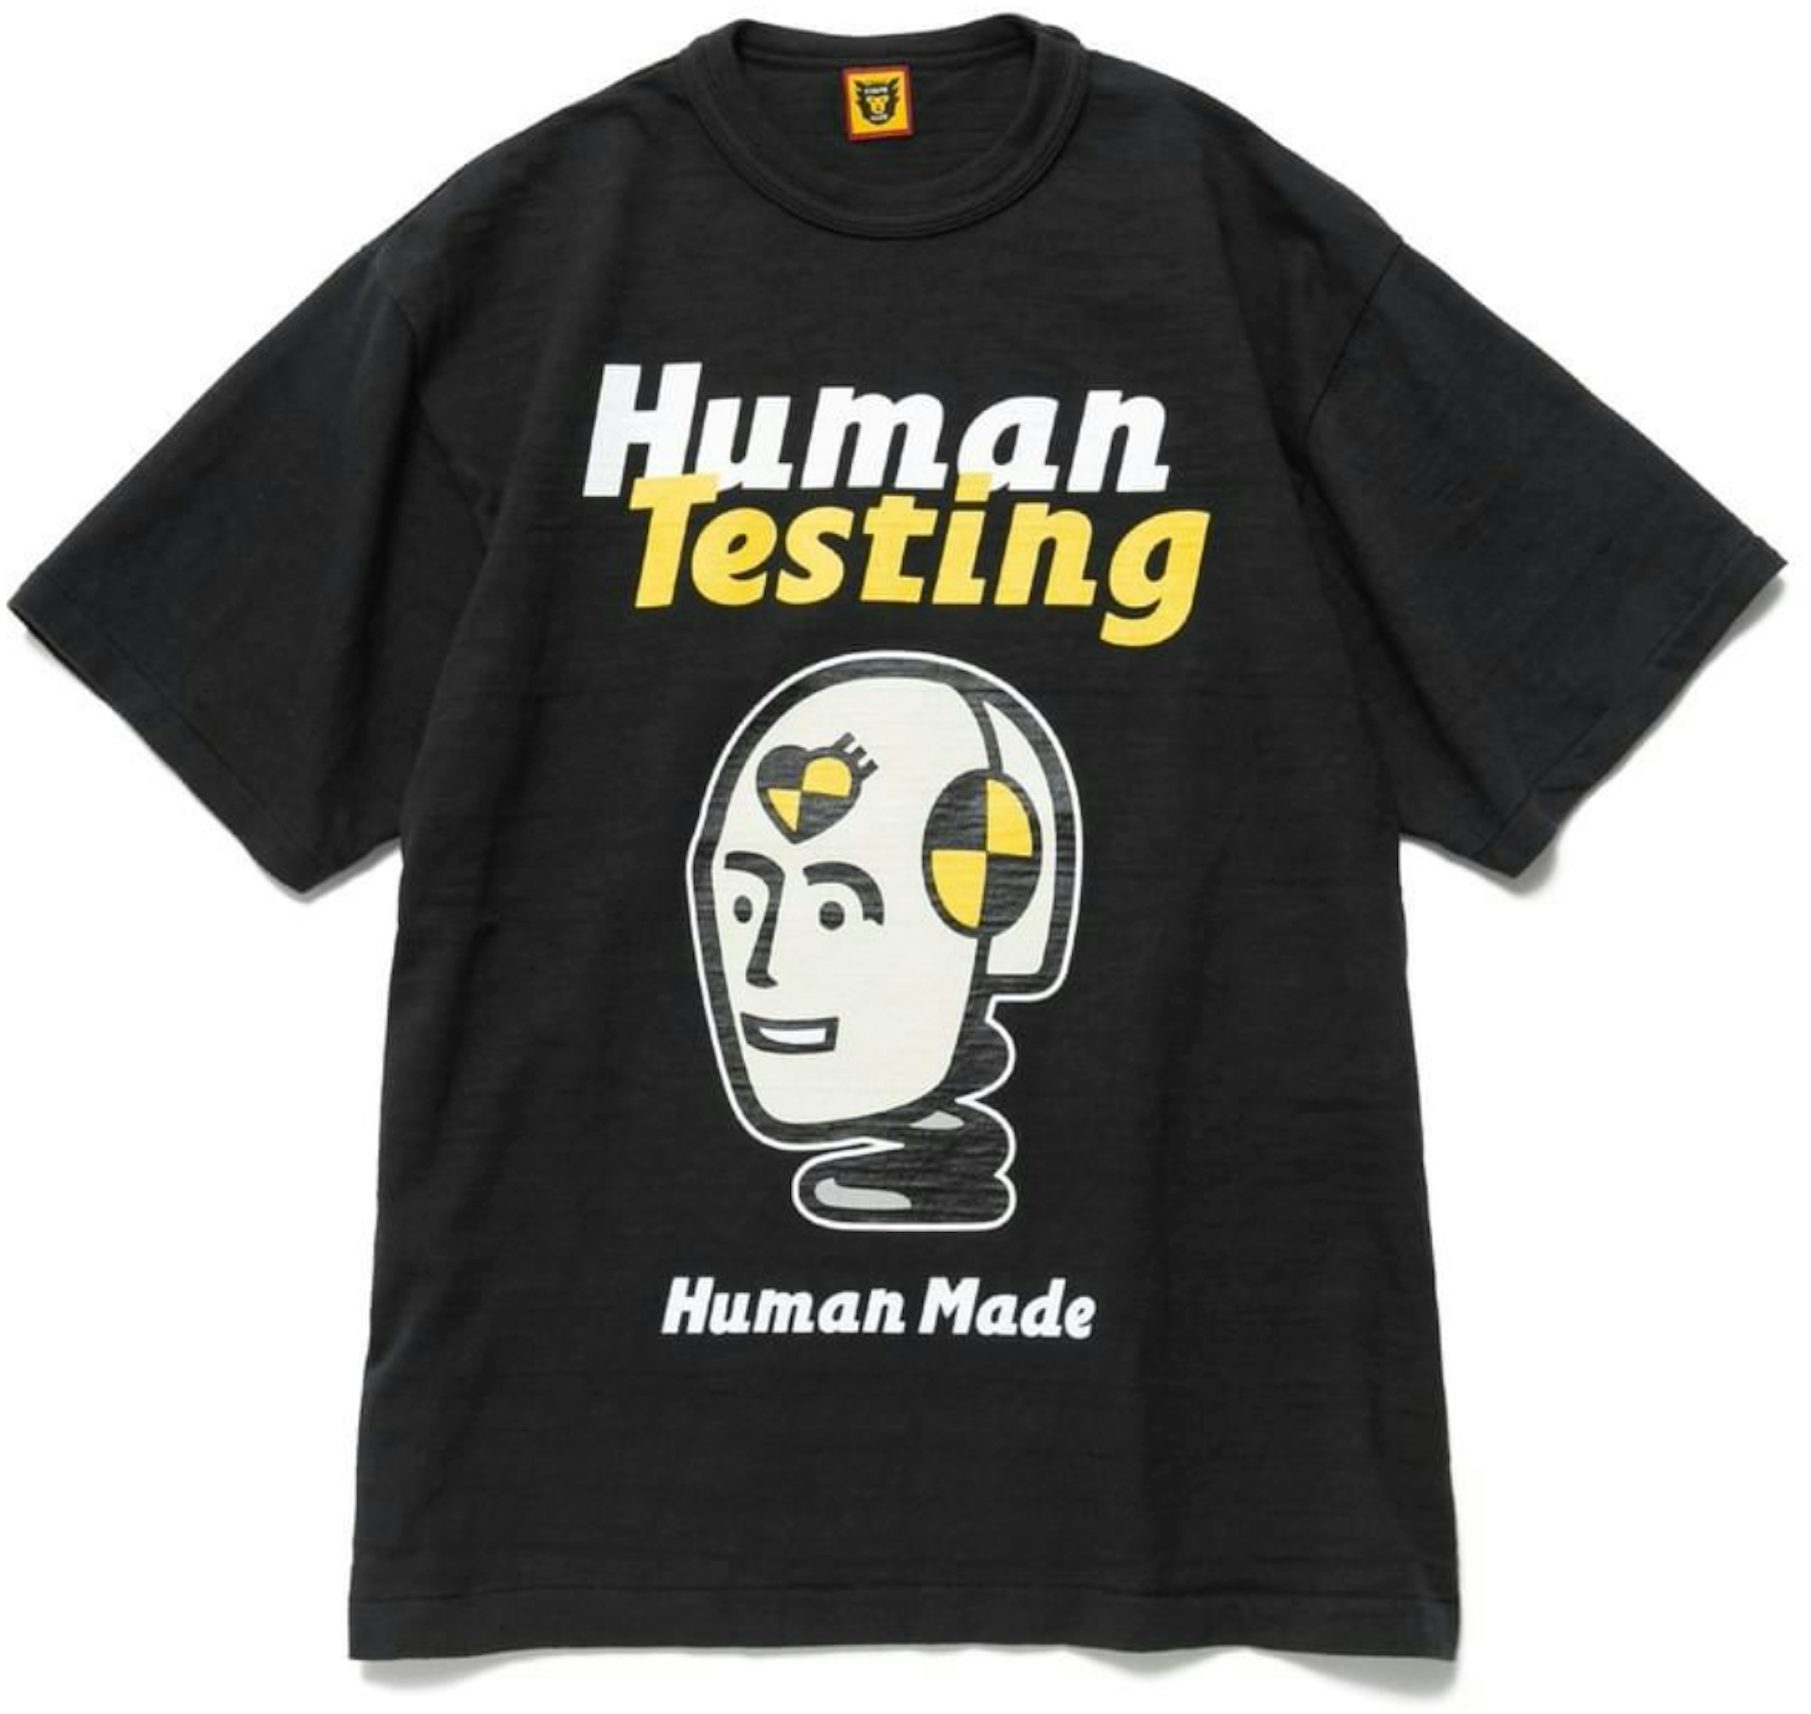 Human Made Pocket T-Shirt #2 M